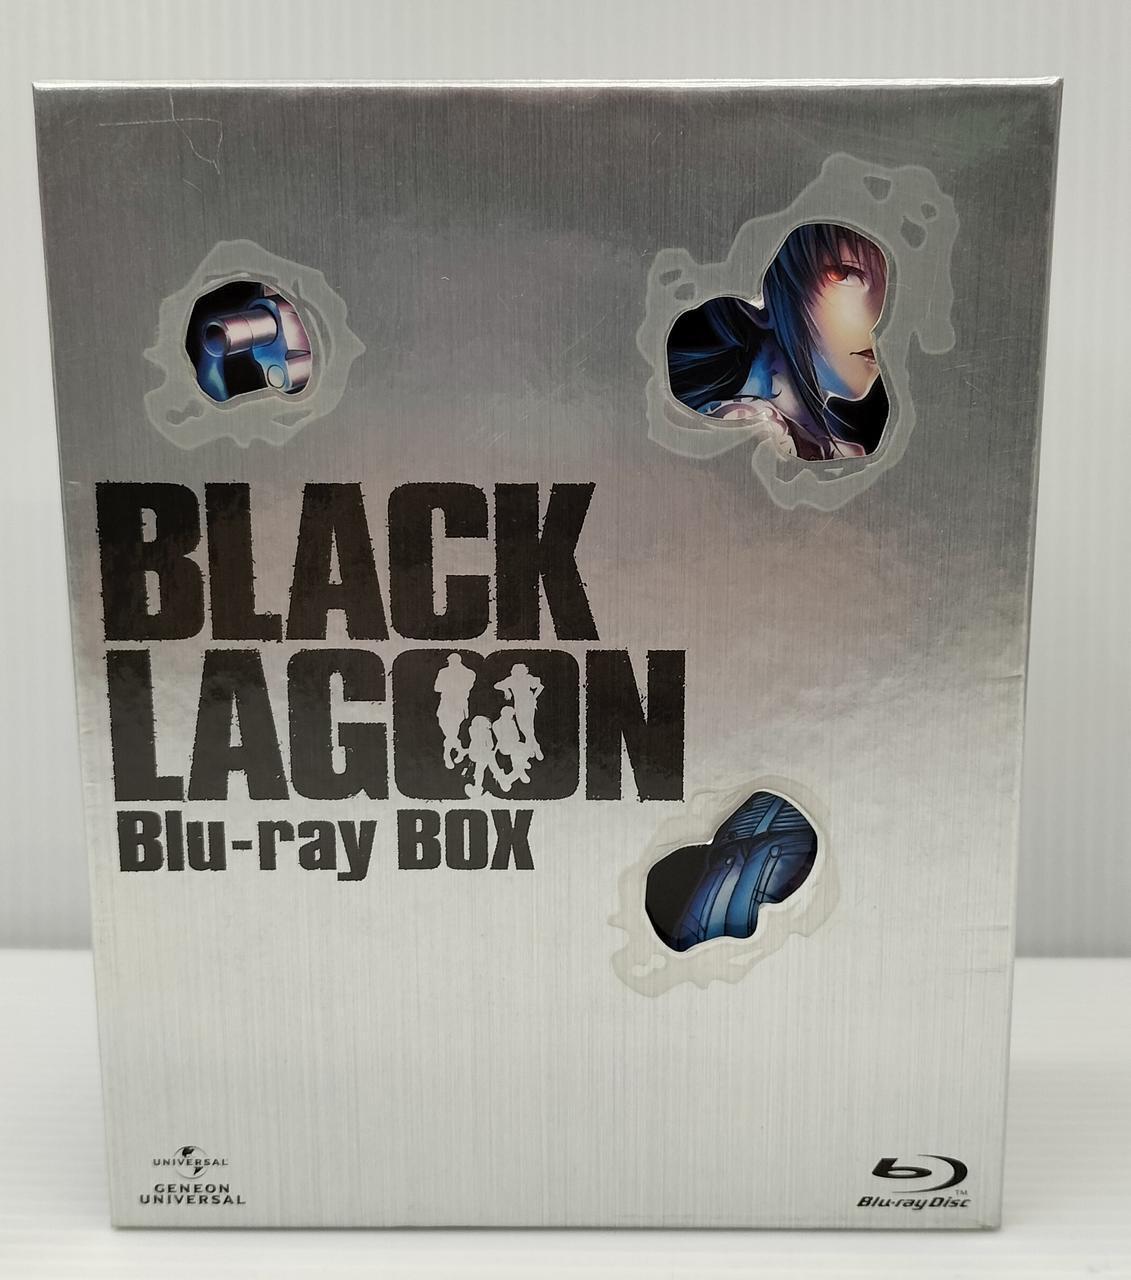 Geneon Universal Entertainment GNXA-7007 BLACK LAGOON BLU-RAY BOX